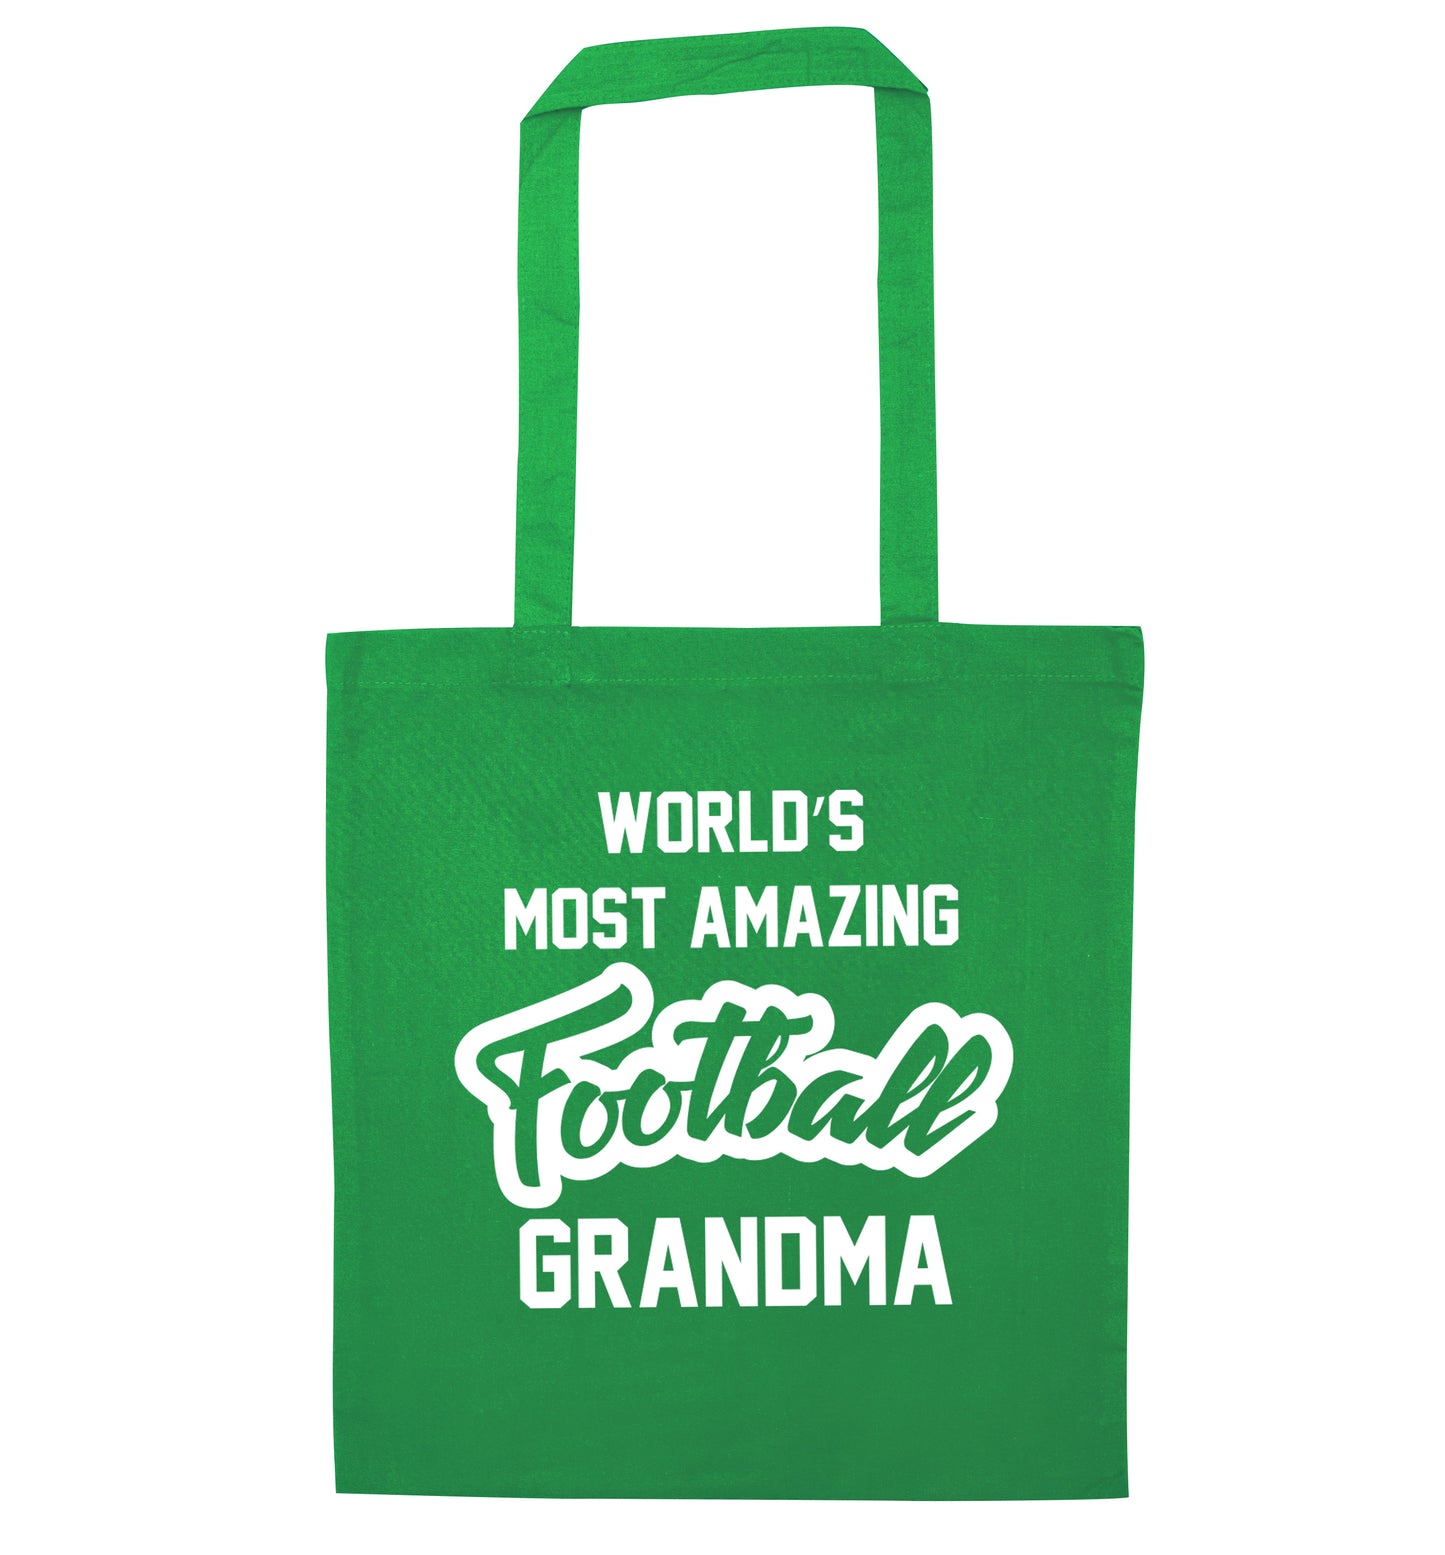 Worlds most amazing football grandma green tote bag